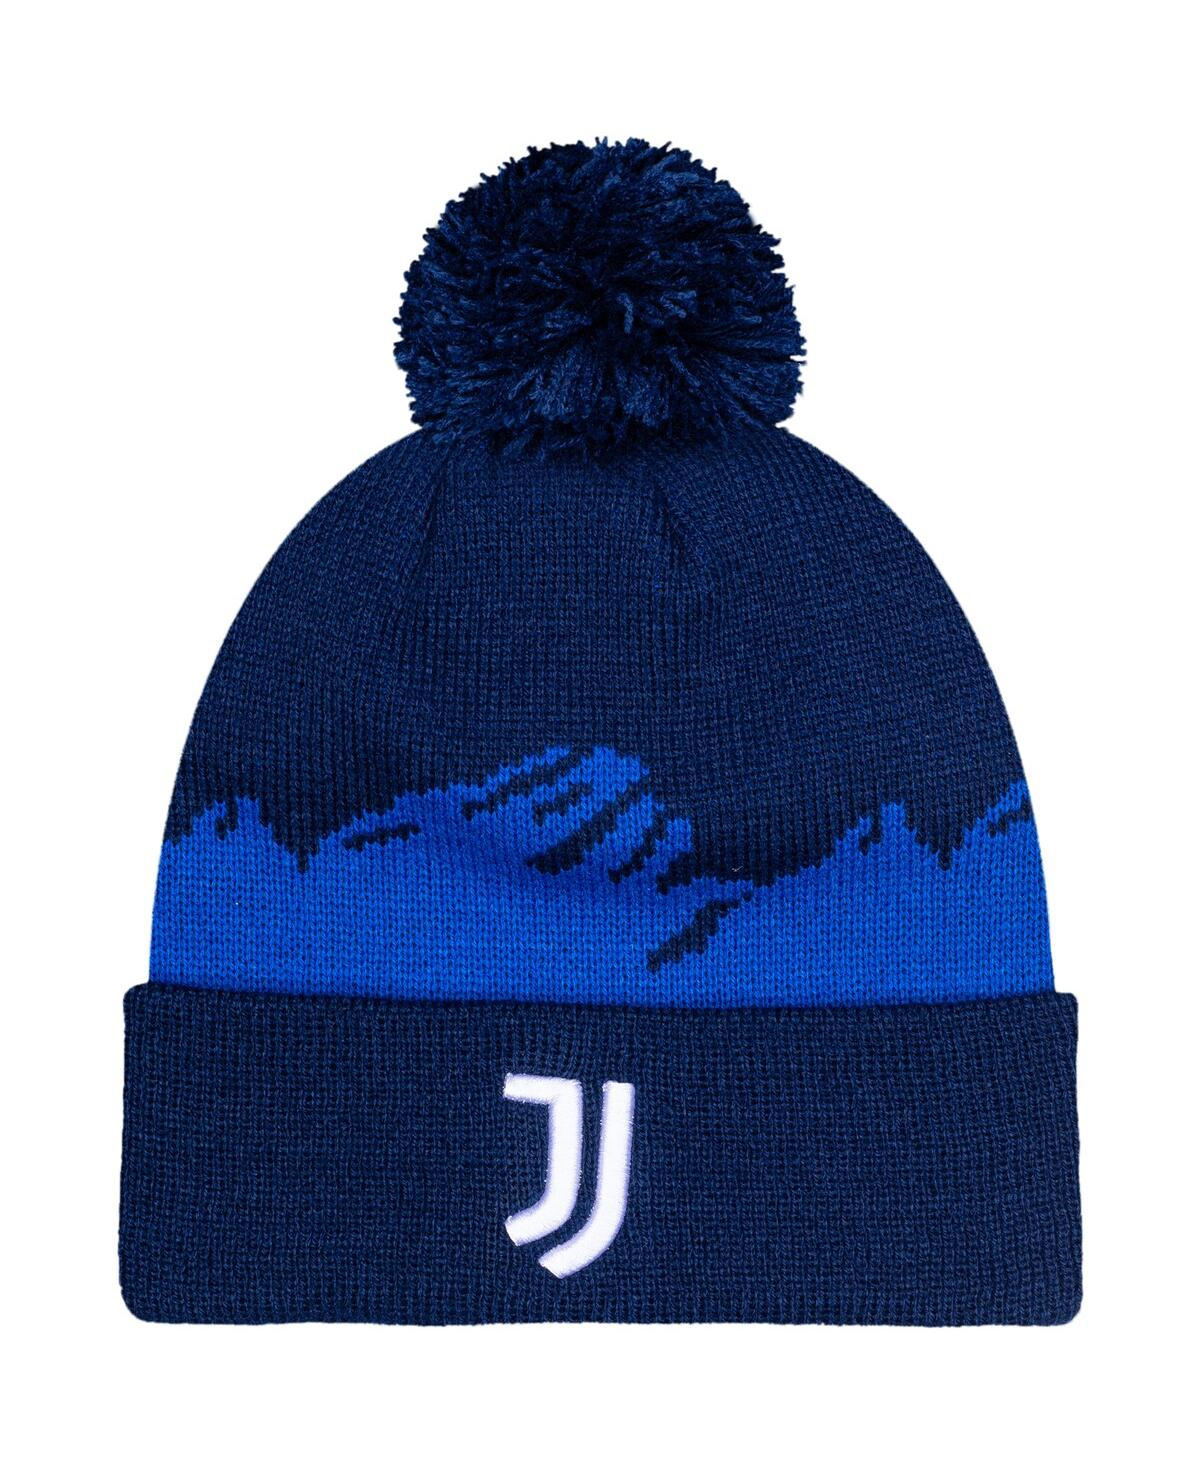 Men's Navy Juventus Pixel Cuffed Knit Hat with Pom - Navy